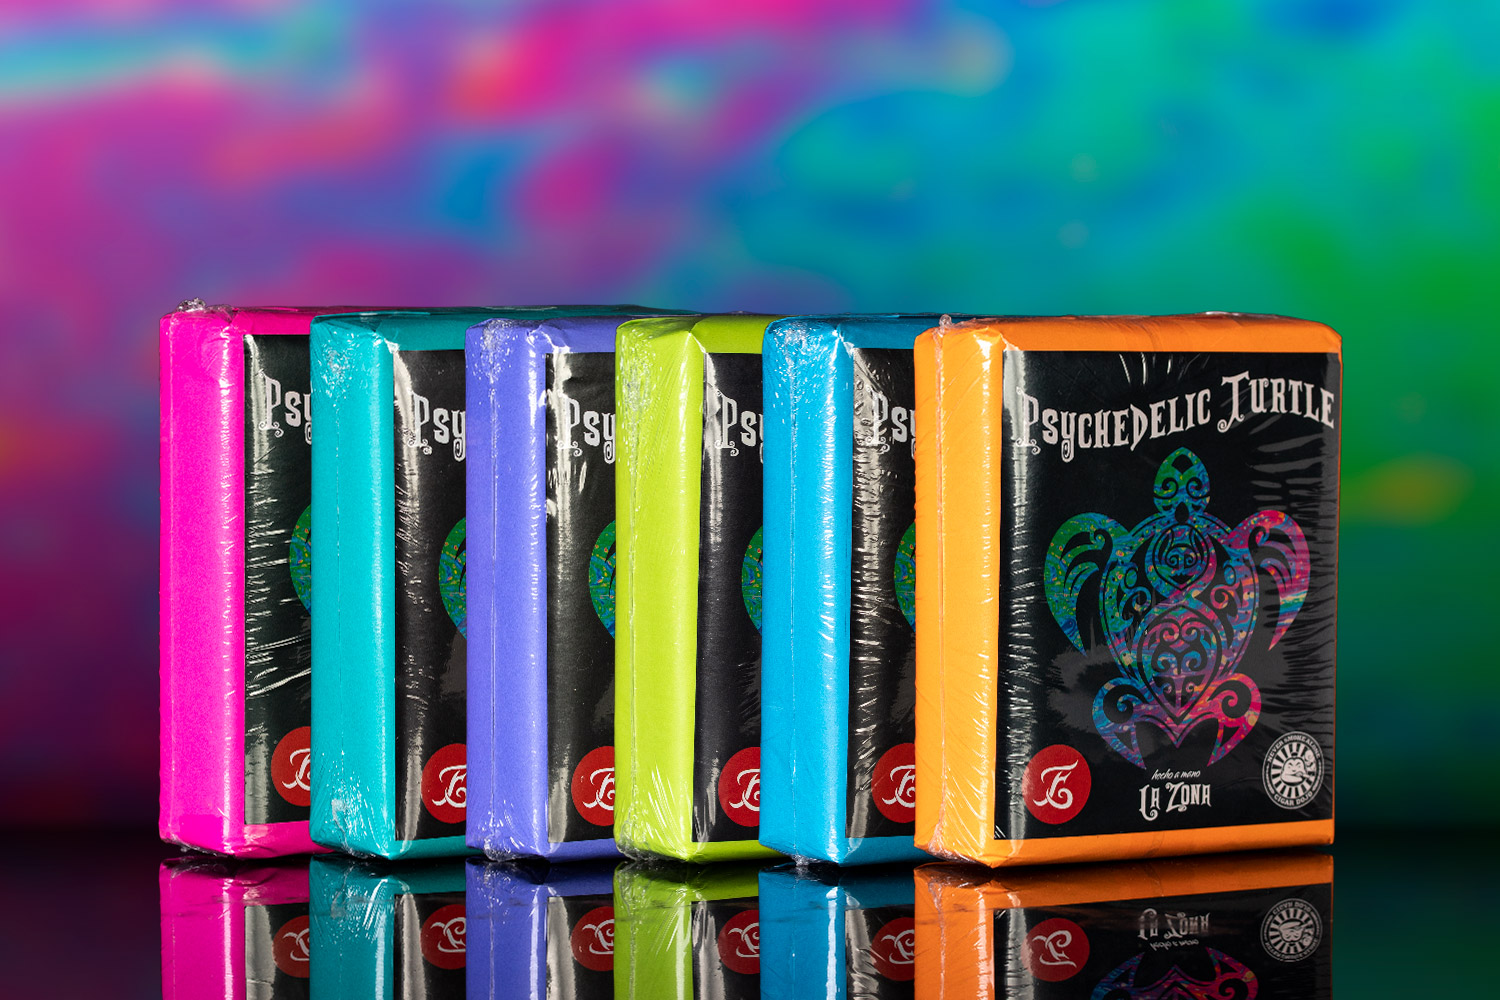 Psychedelic Turtle multi-color cigar bundles official